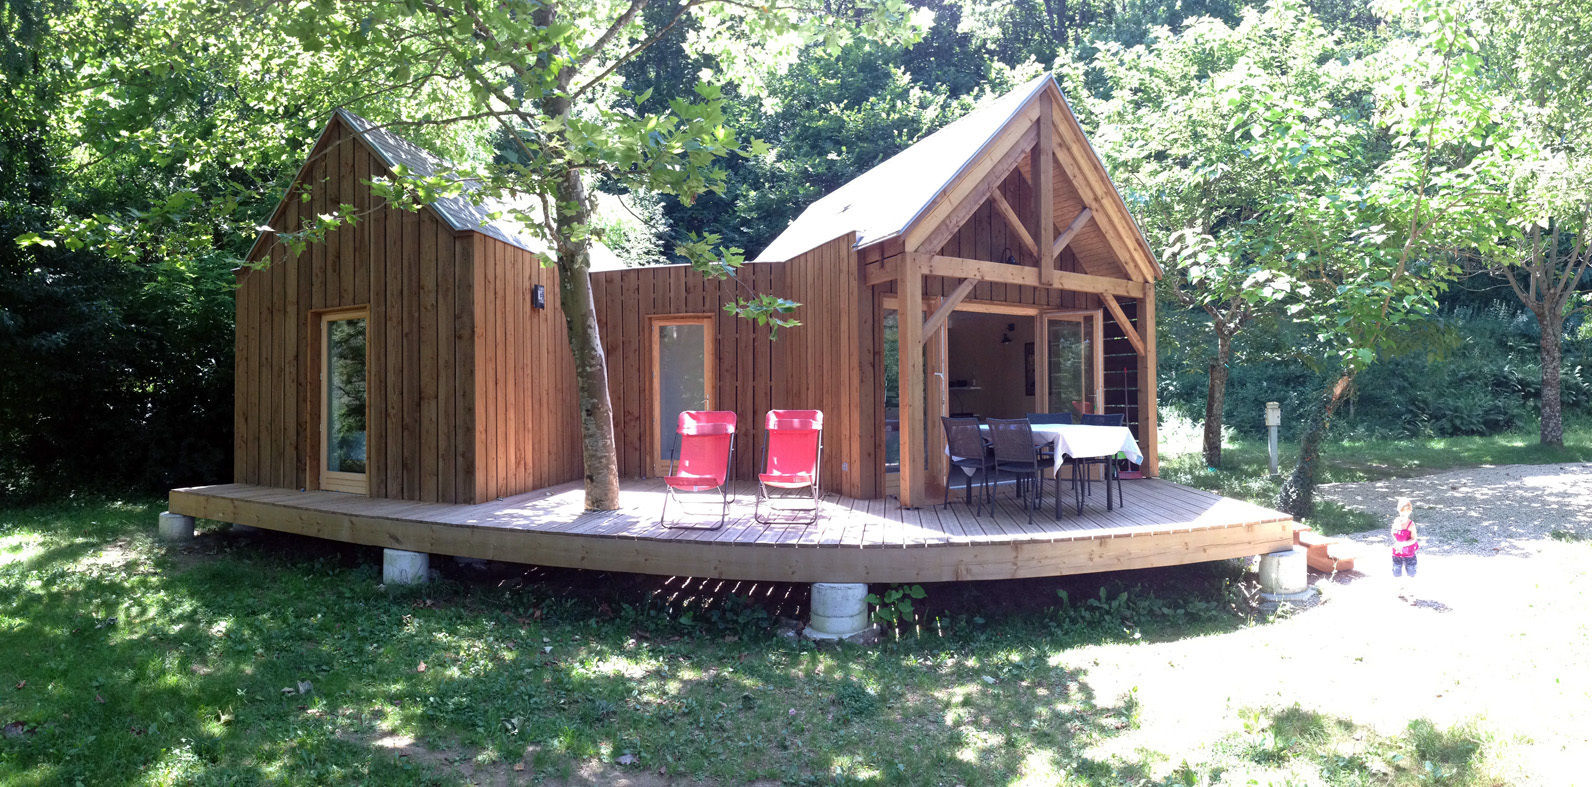 Habitat de loisir en bois - camping les Clots mirandol - bourgnounac, ...architectes ...architectes مساحات تجارية فنادق